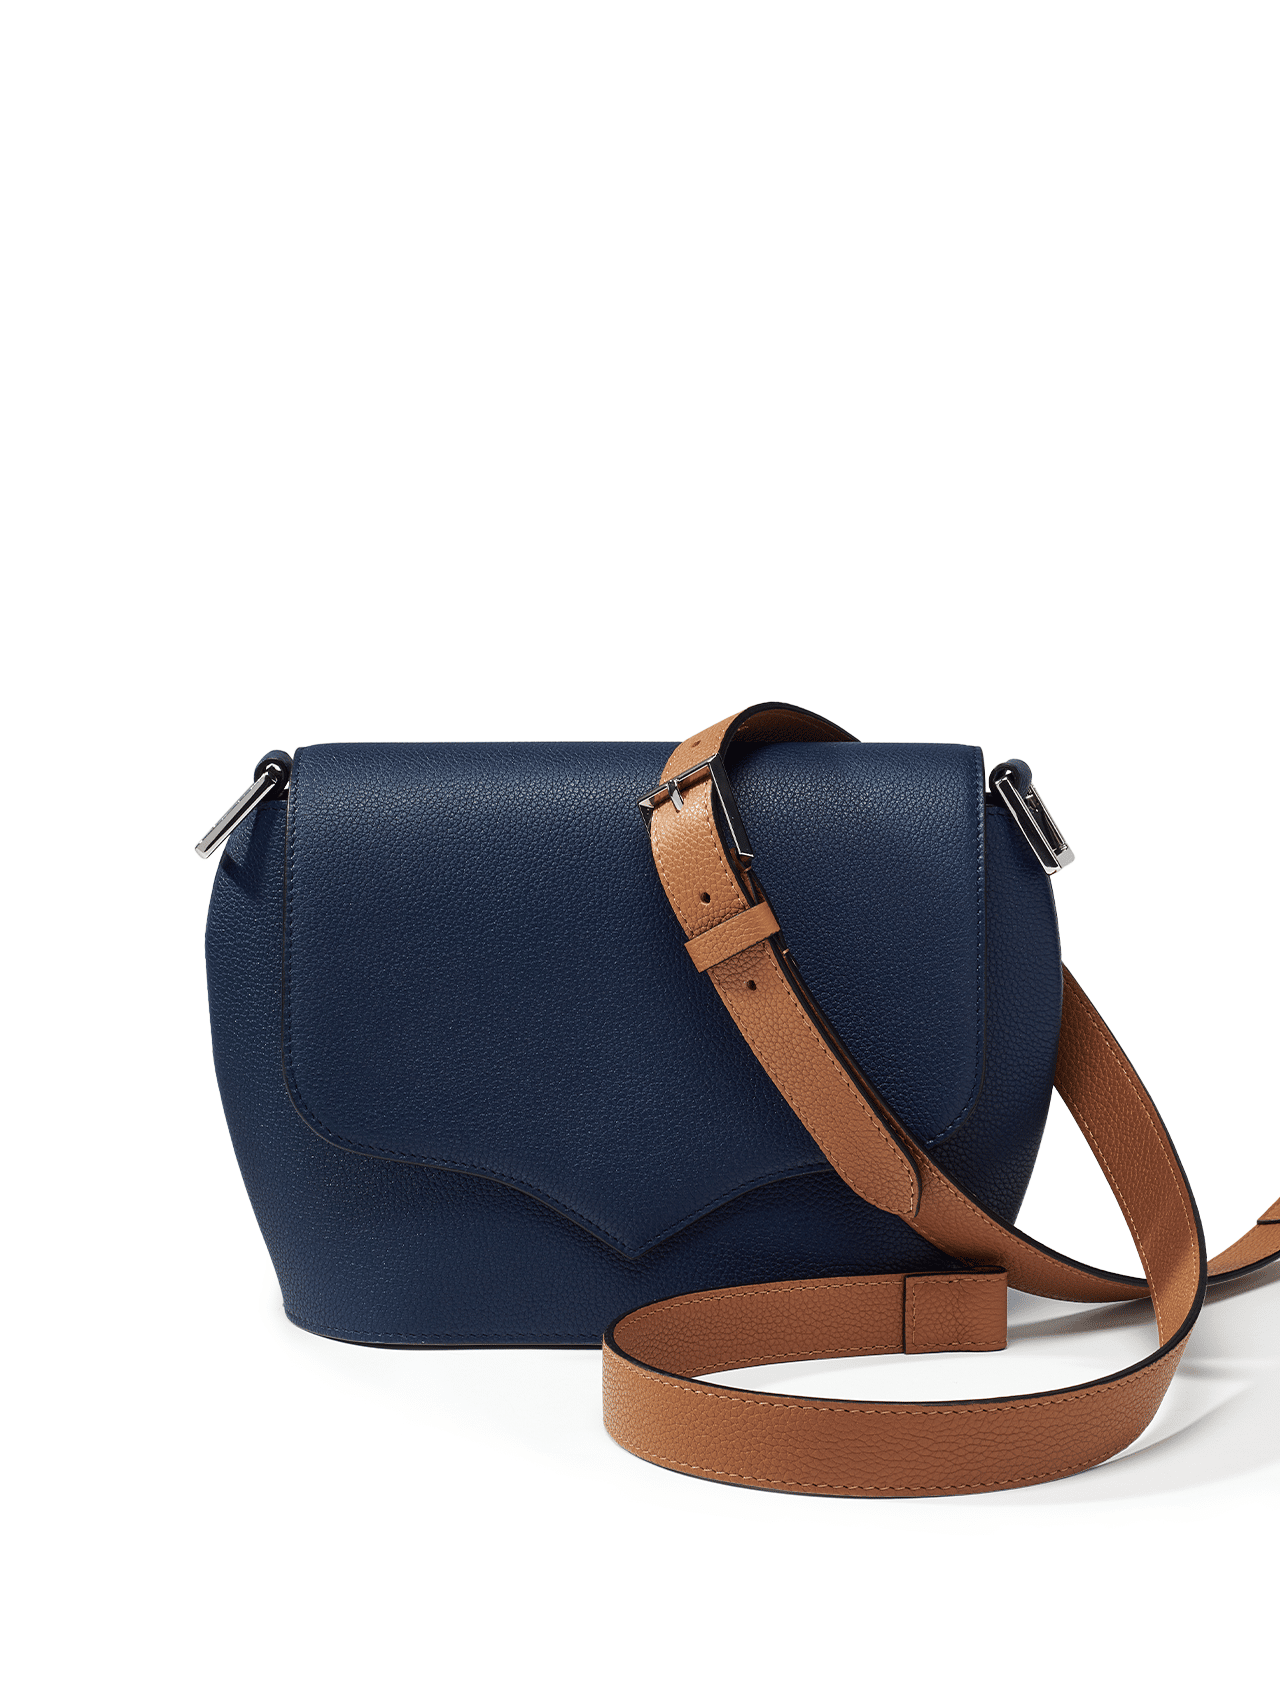 bag leather jean rousseau blue brown